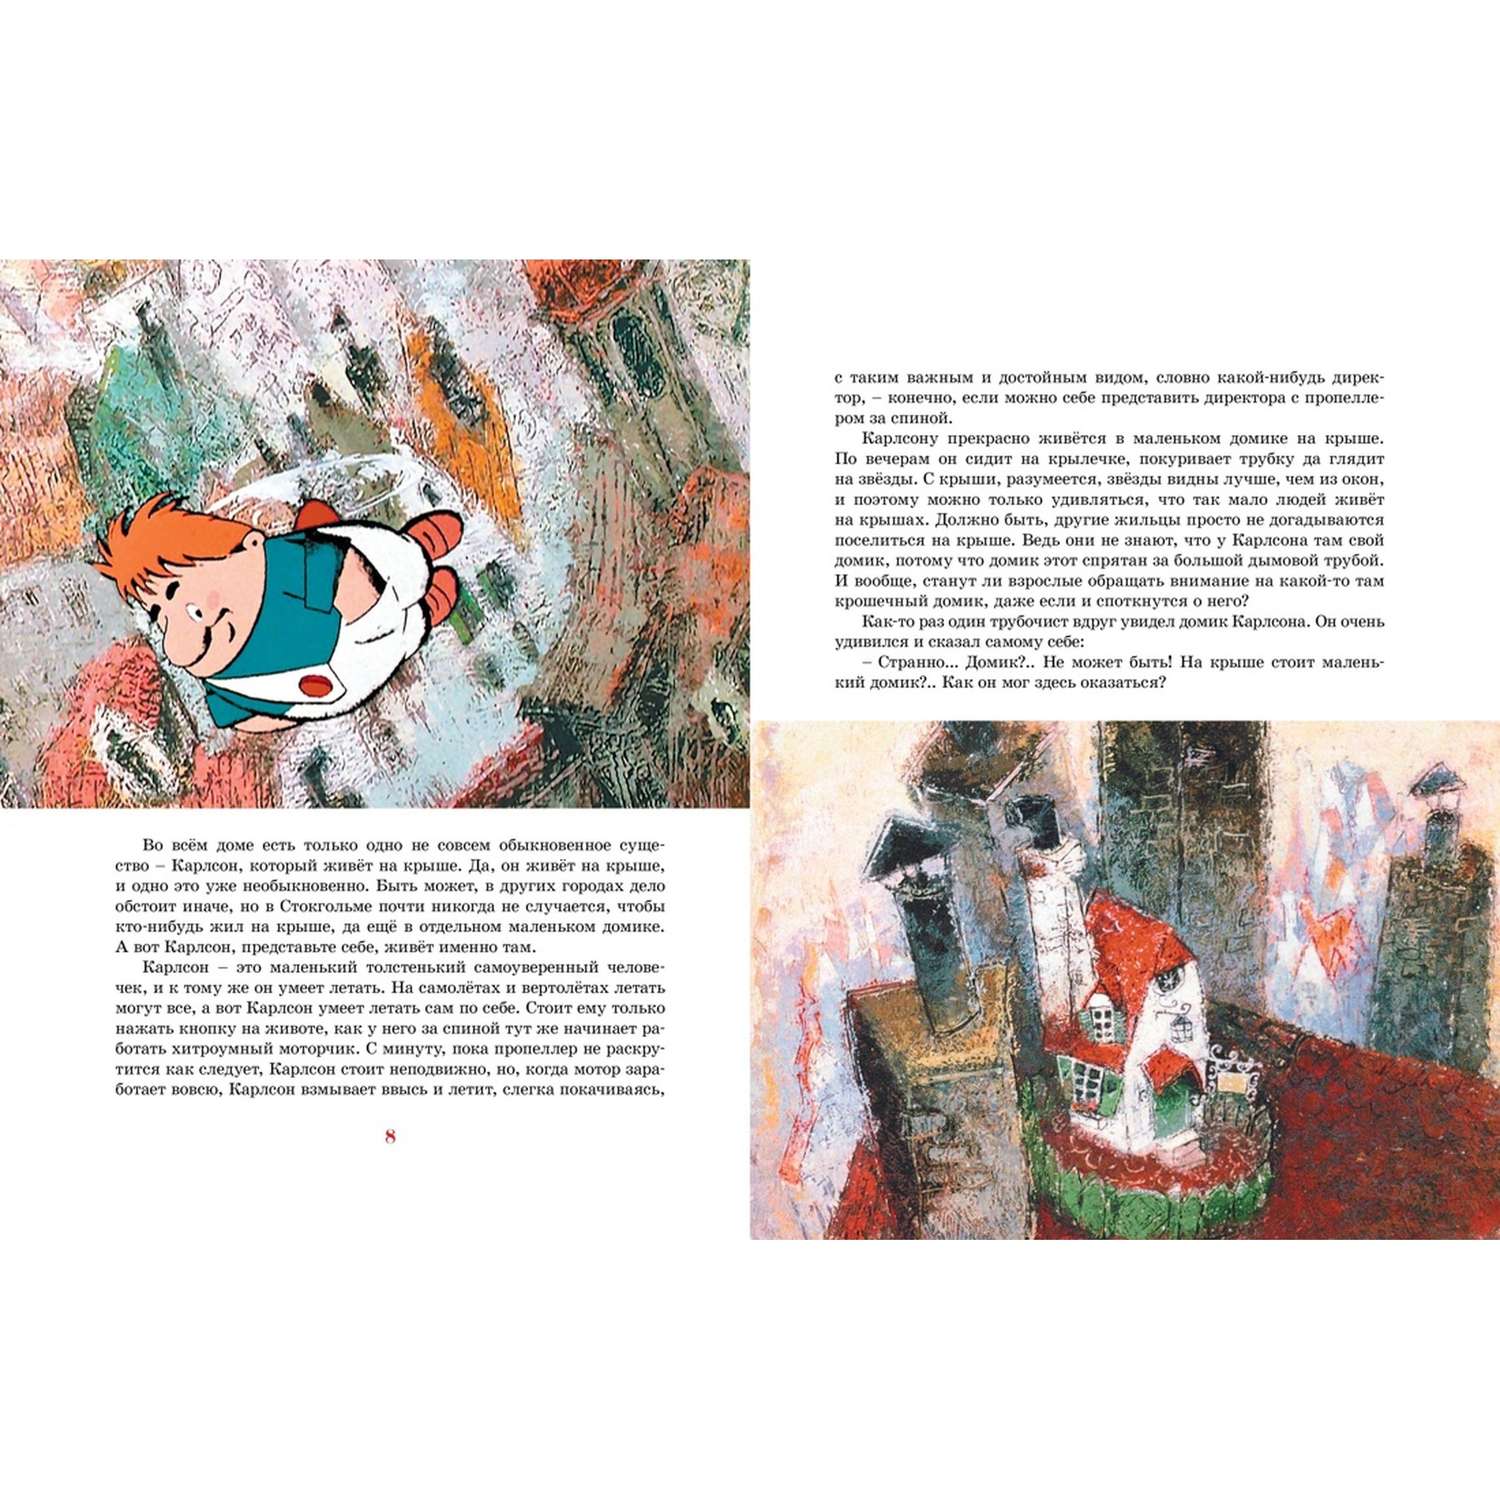 Книга Малыш и Карлсон который живёт на крыше Линдгрен иллюстрации Савченко - фото 5